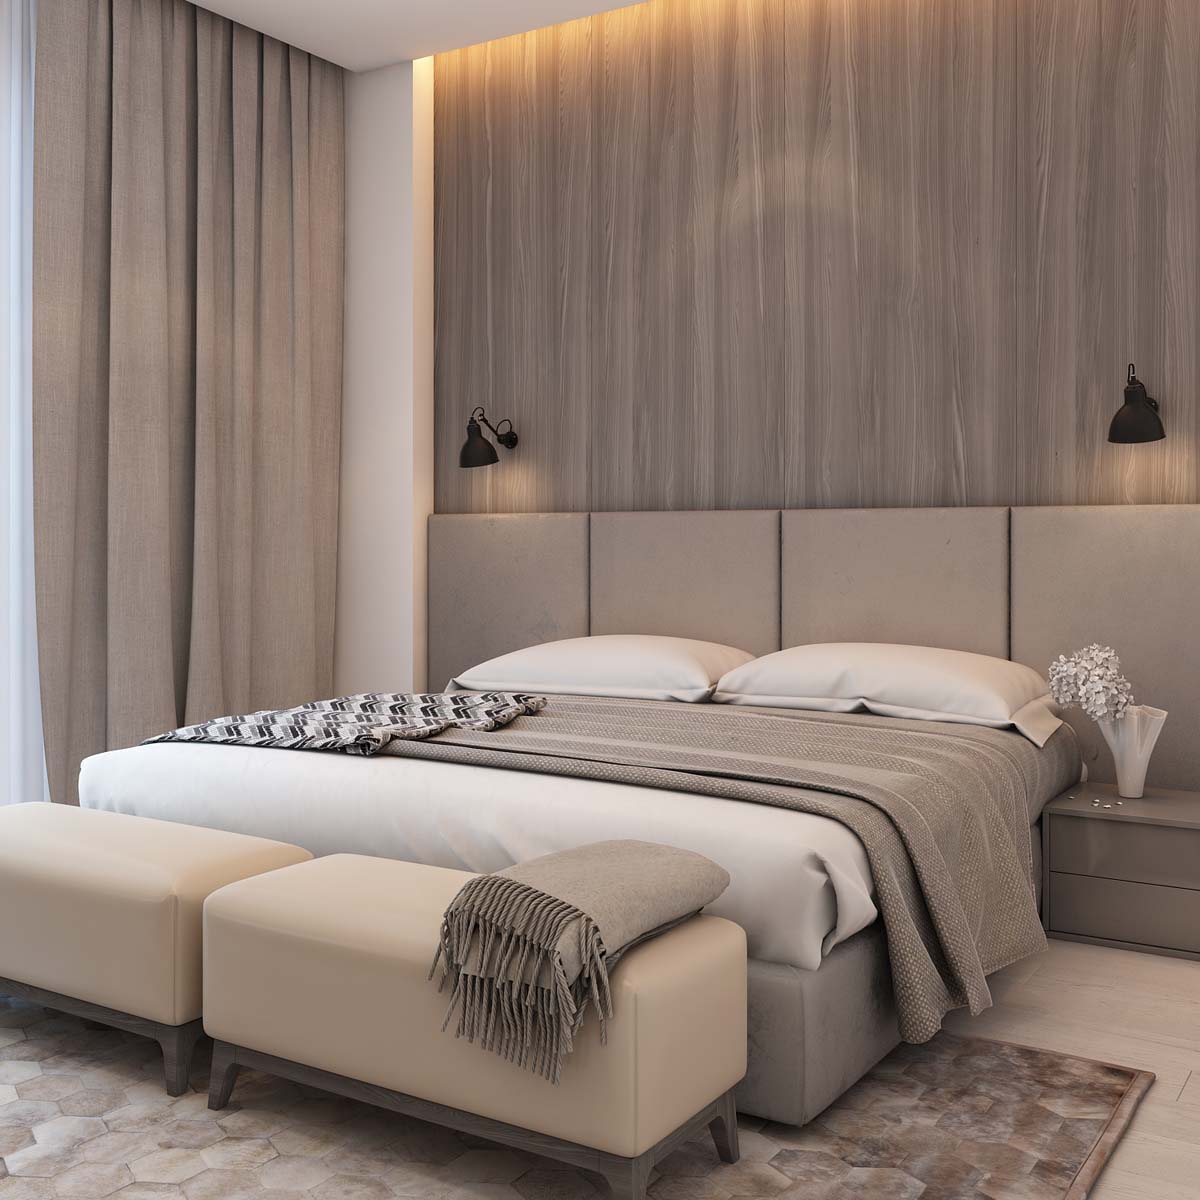 simple bedroom design with wooden